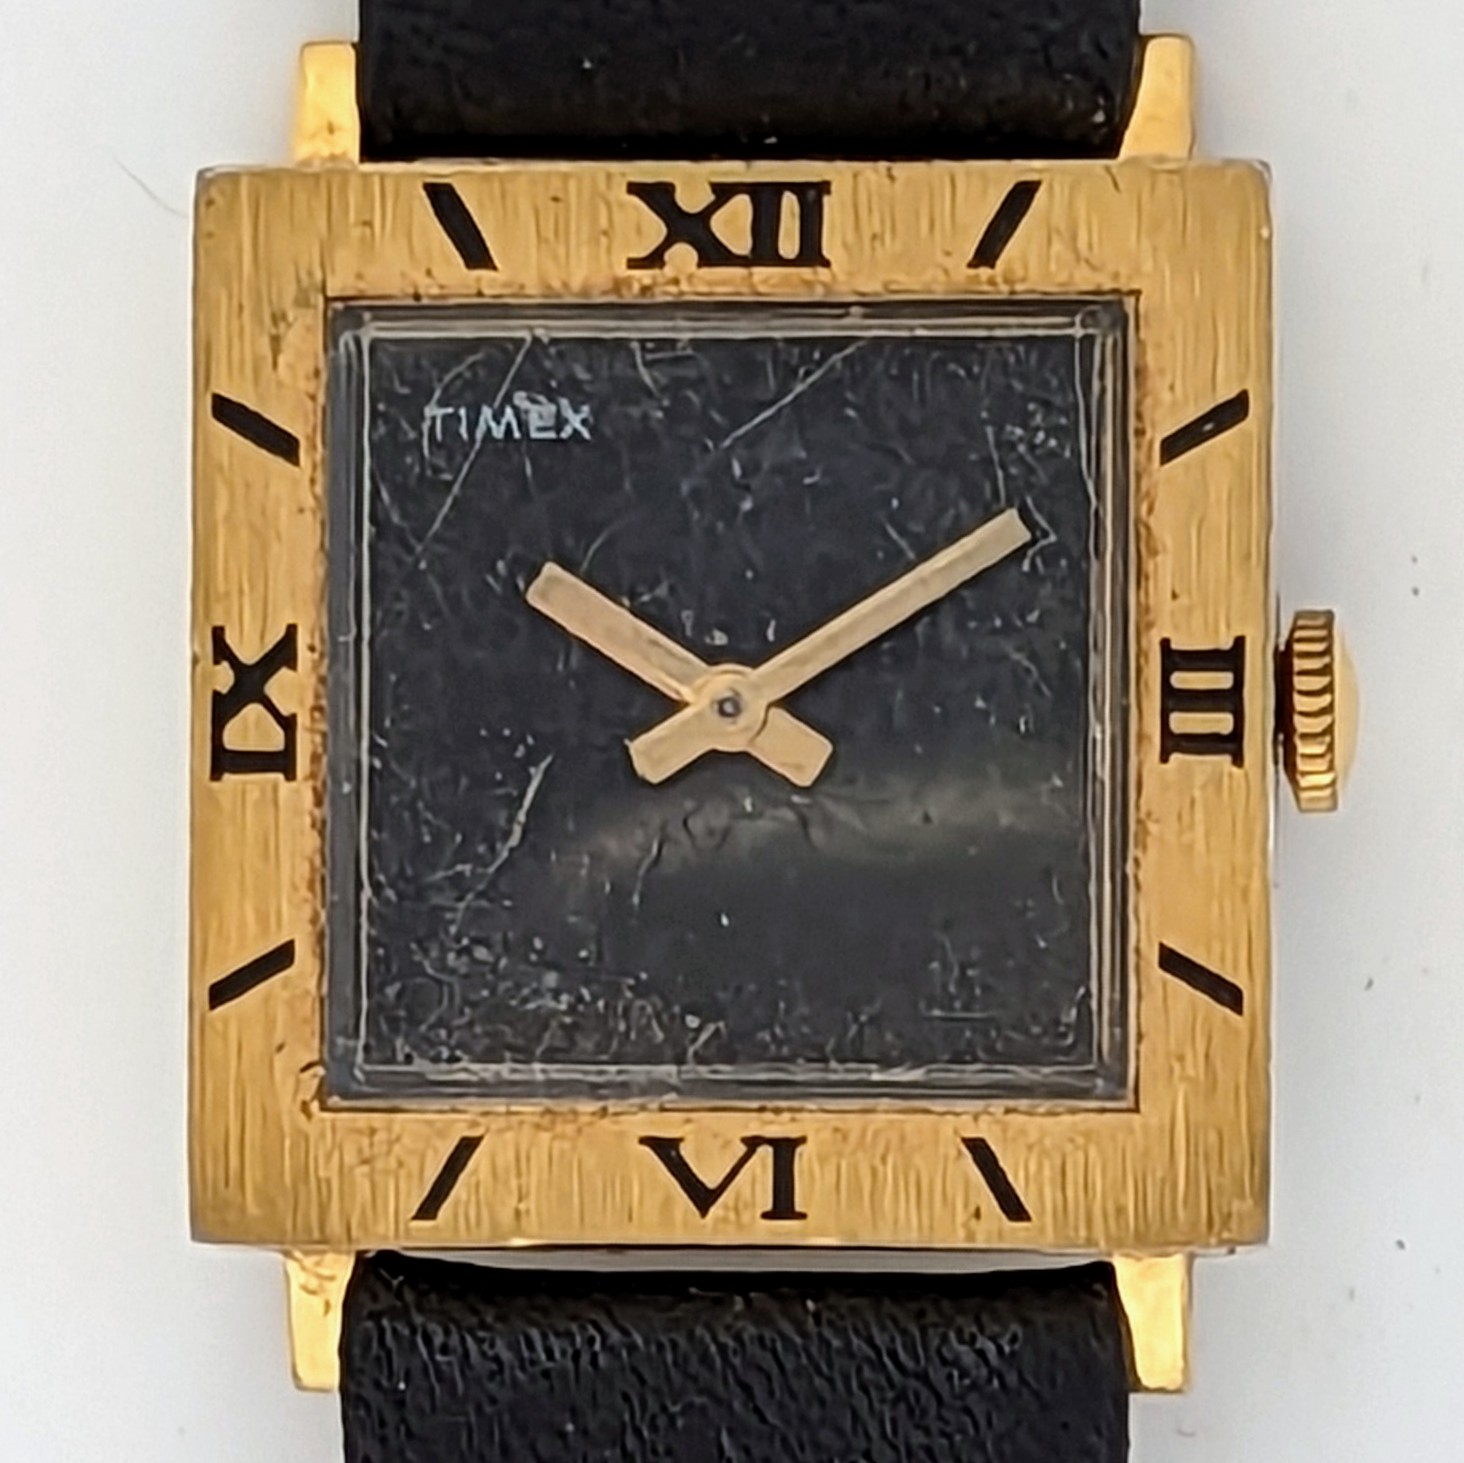 Timex Super Thin 5180 2370 [1970]